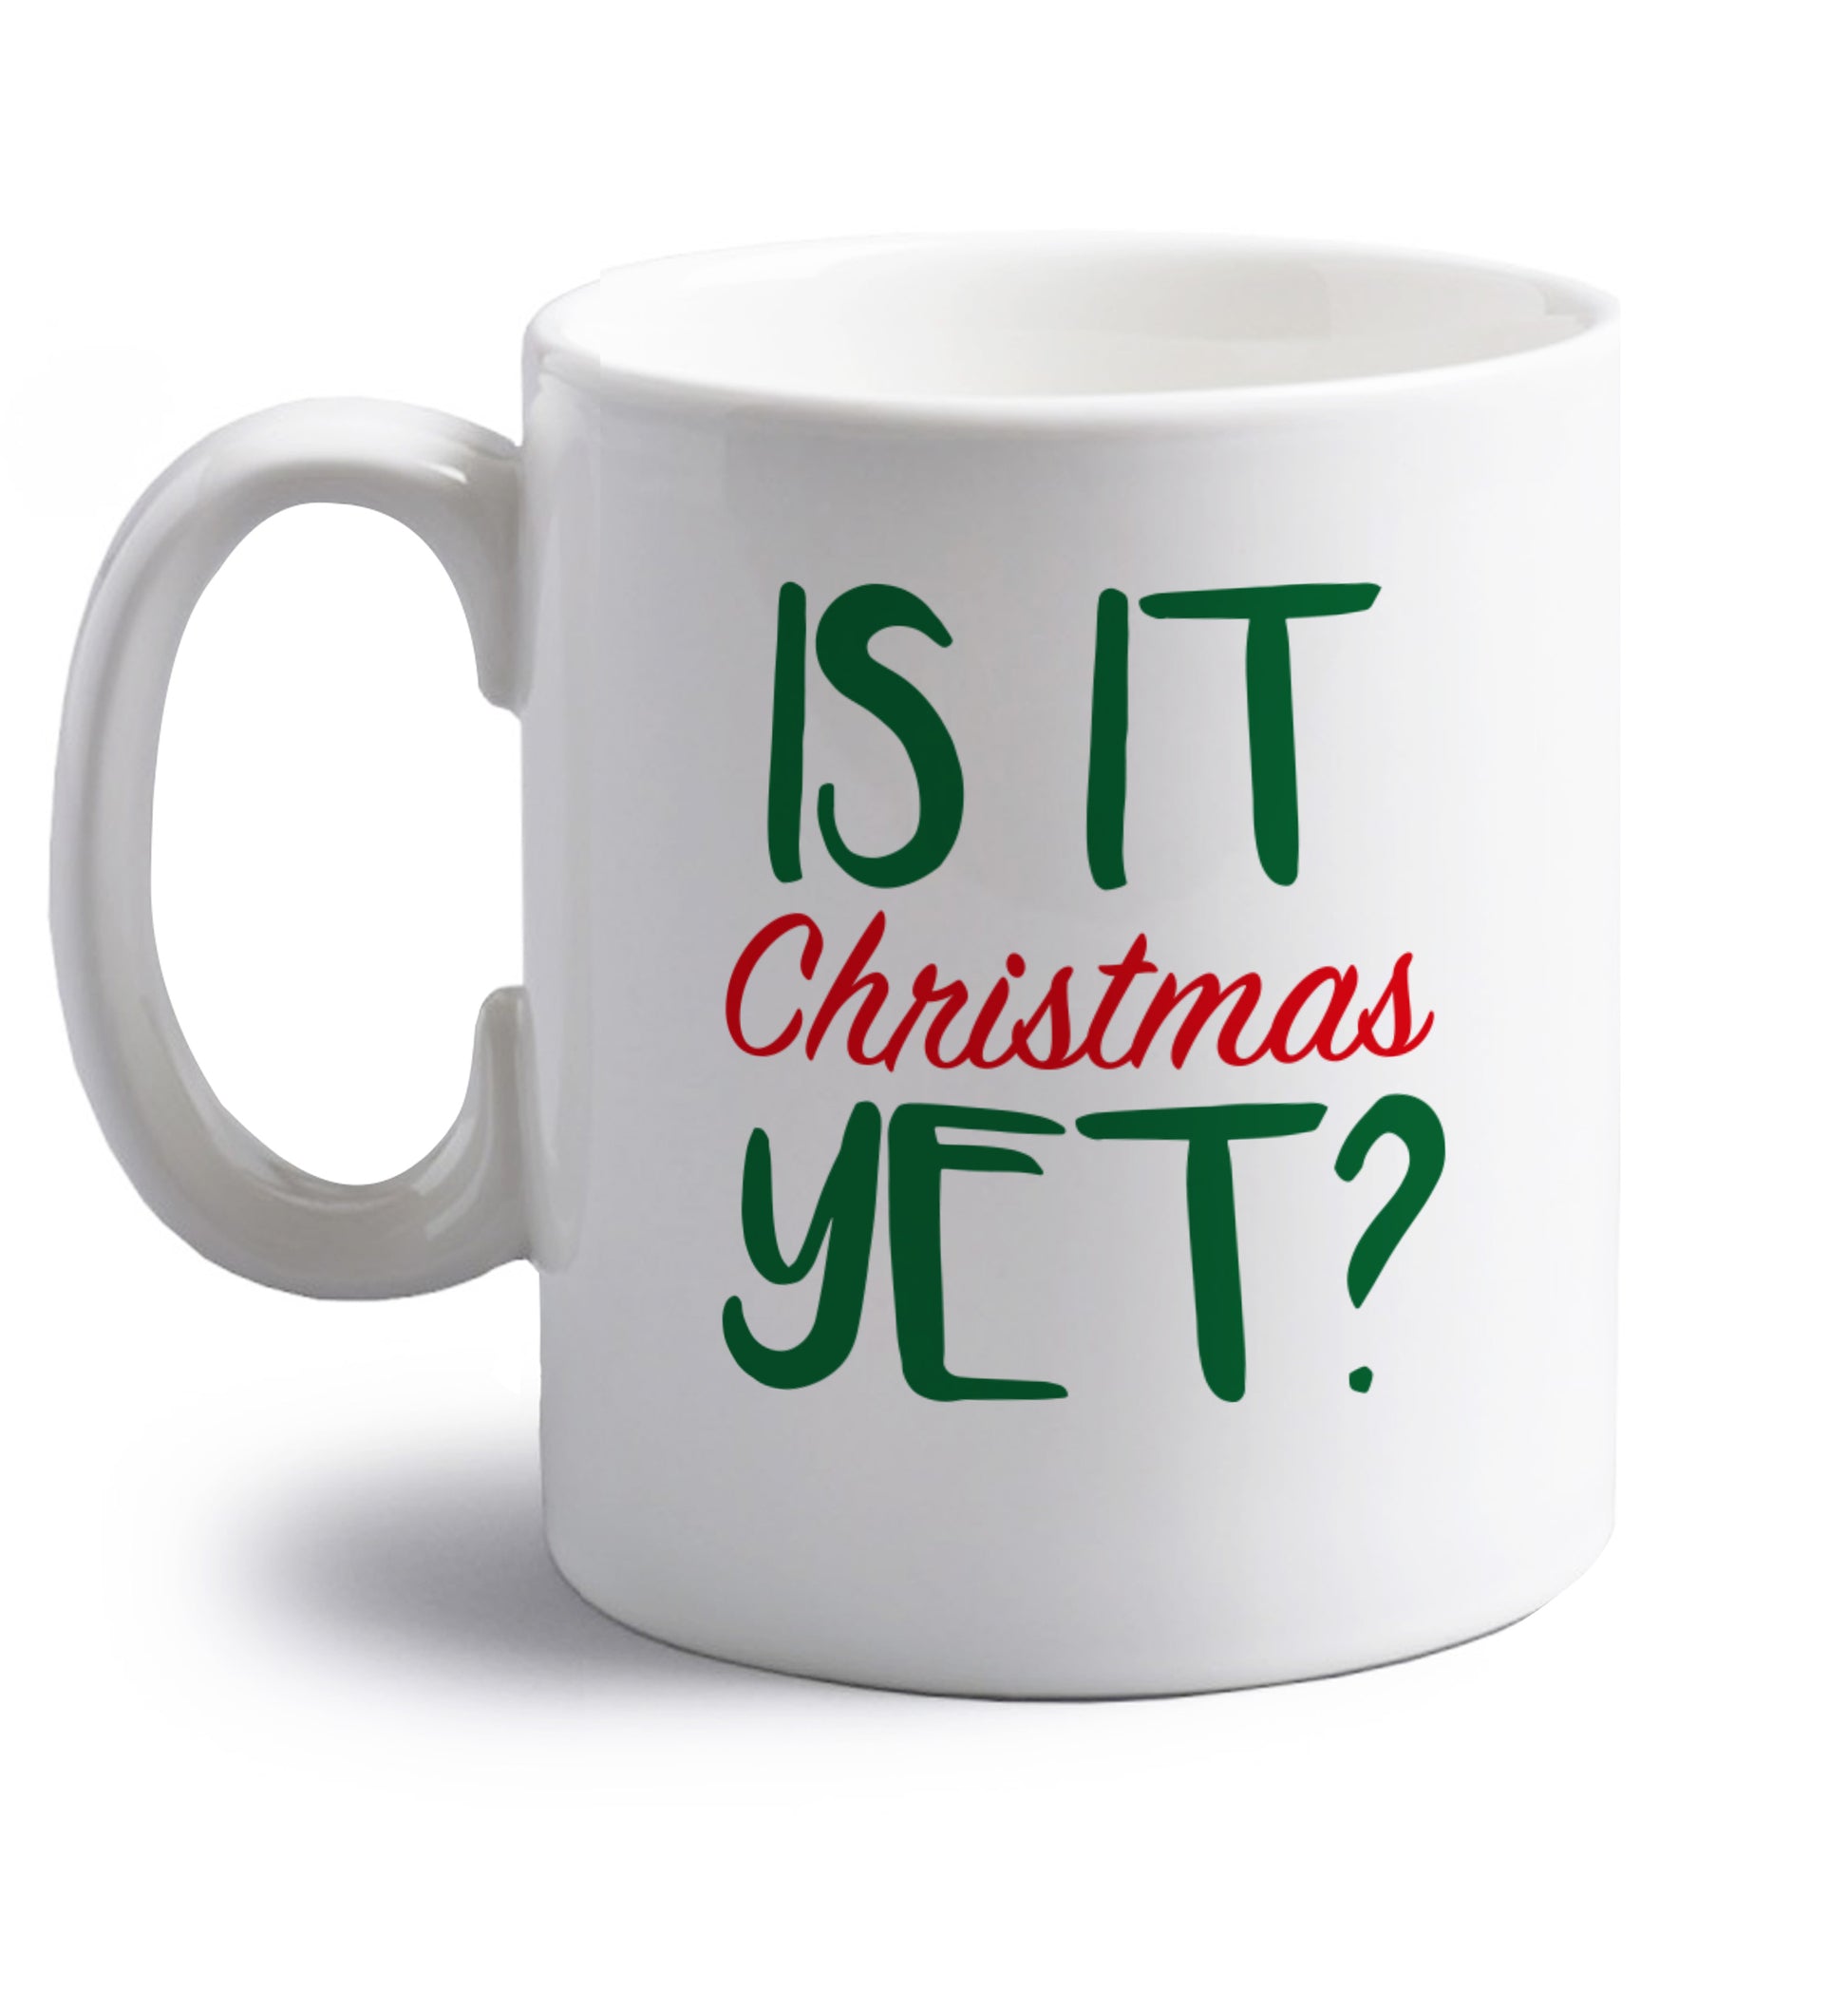 Is it Christmas yet? right handed white ceramic mug 